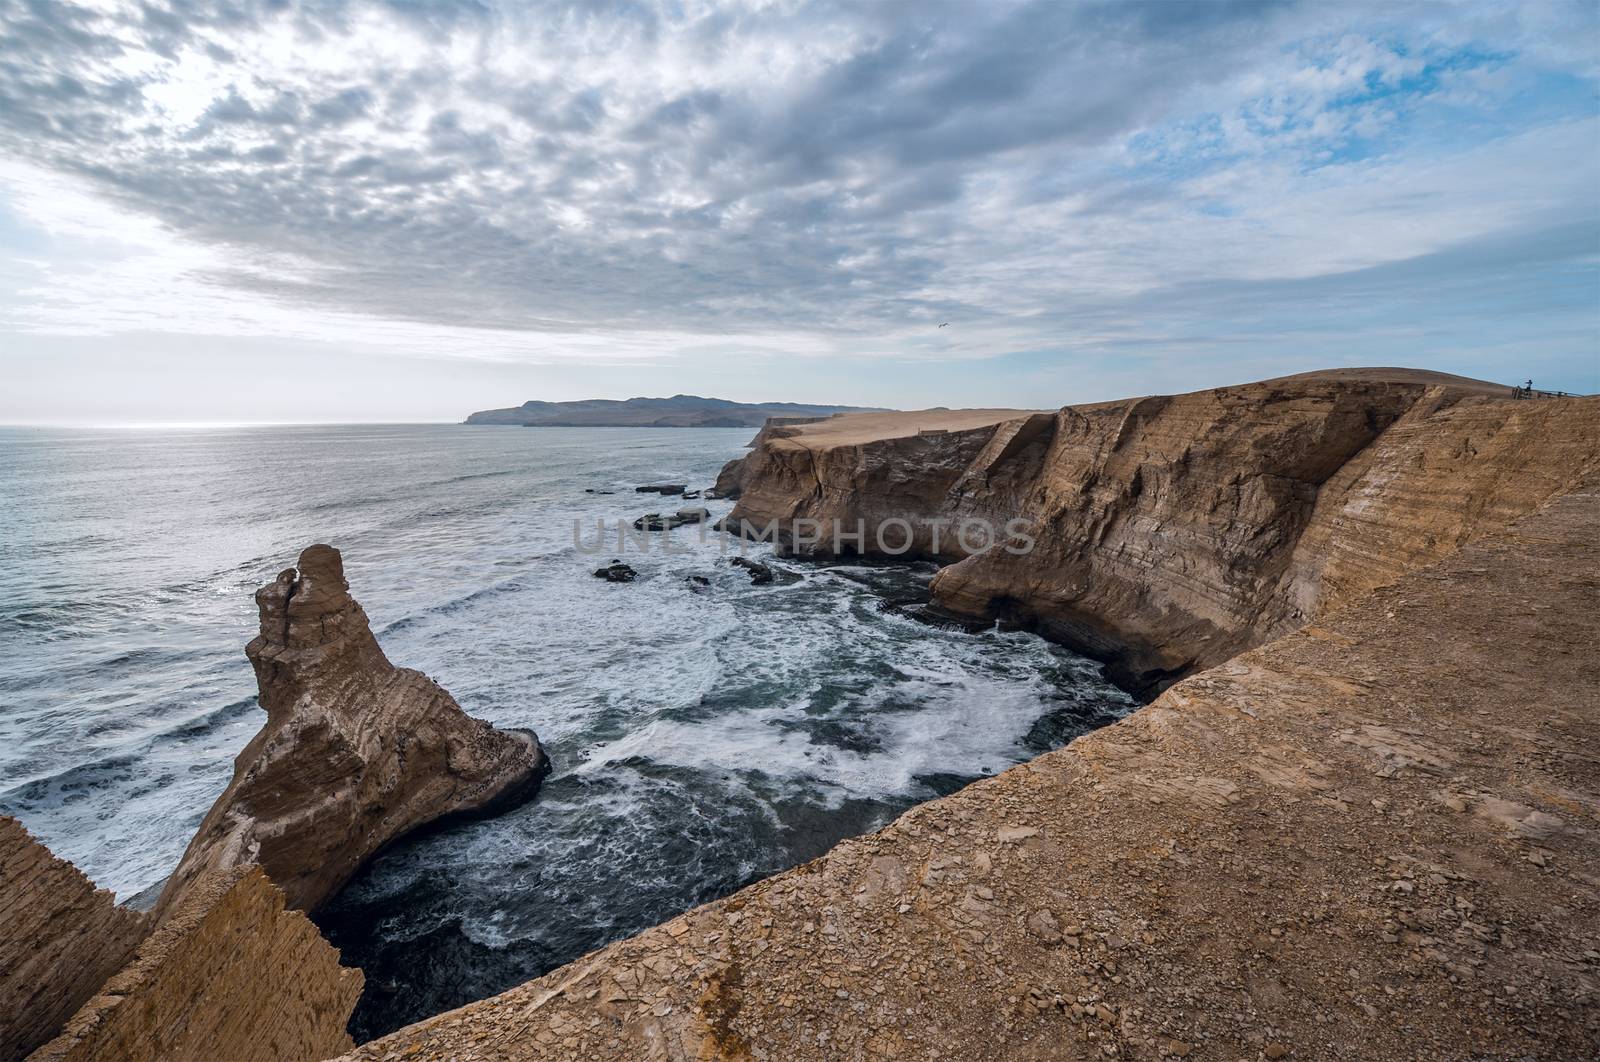 Peruvian Coastline, Rock formations at the coast, Paracas National Reserve, Paracas, Ica Region, Peru.